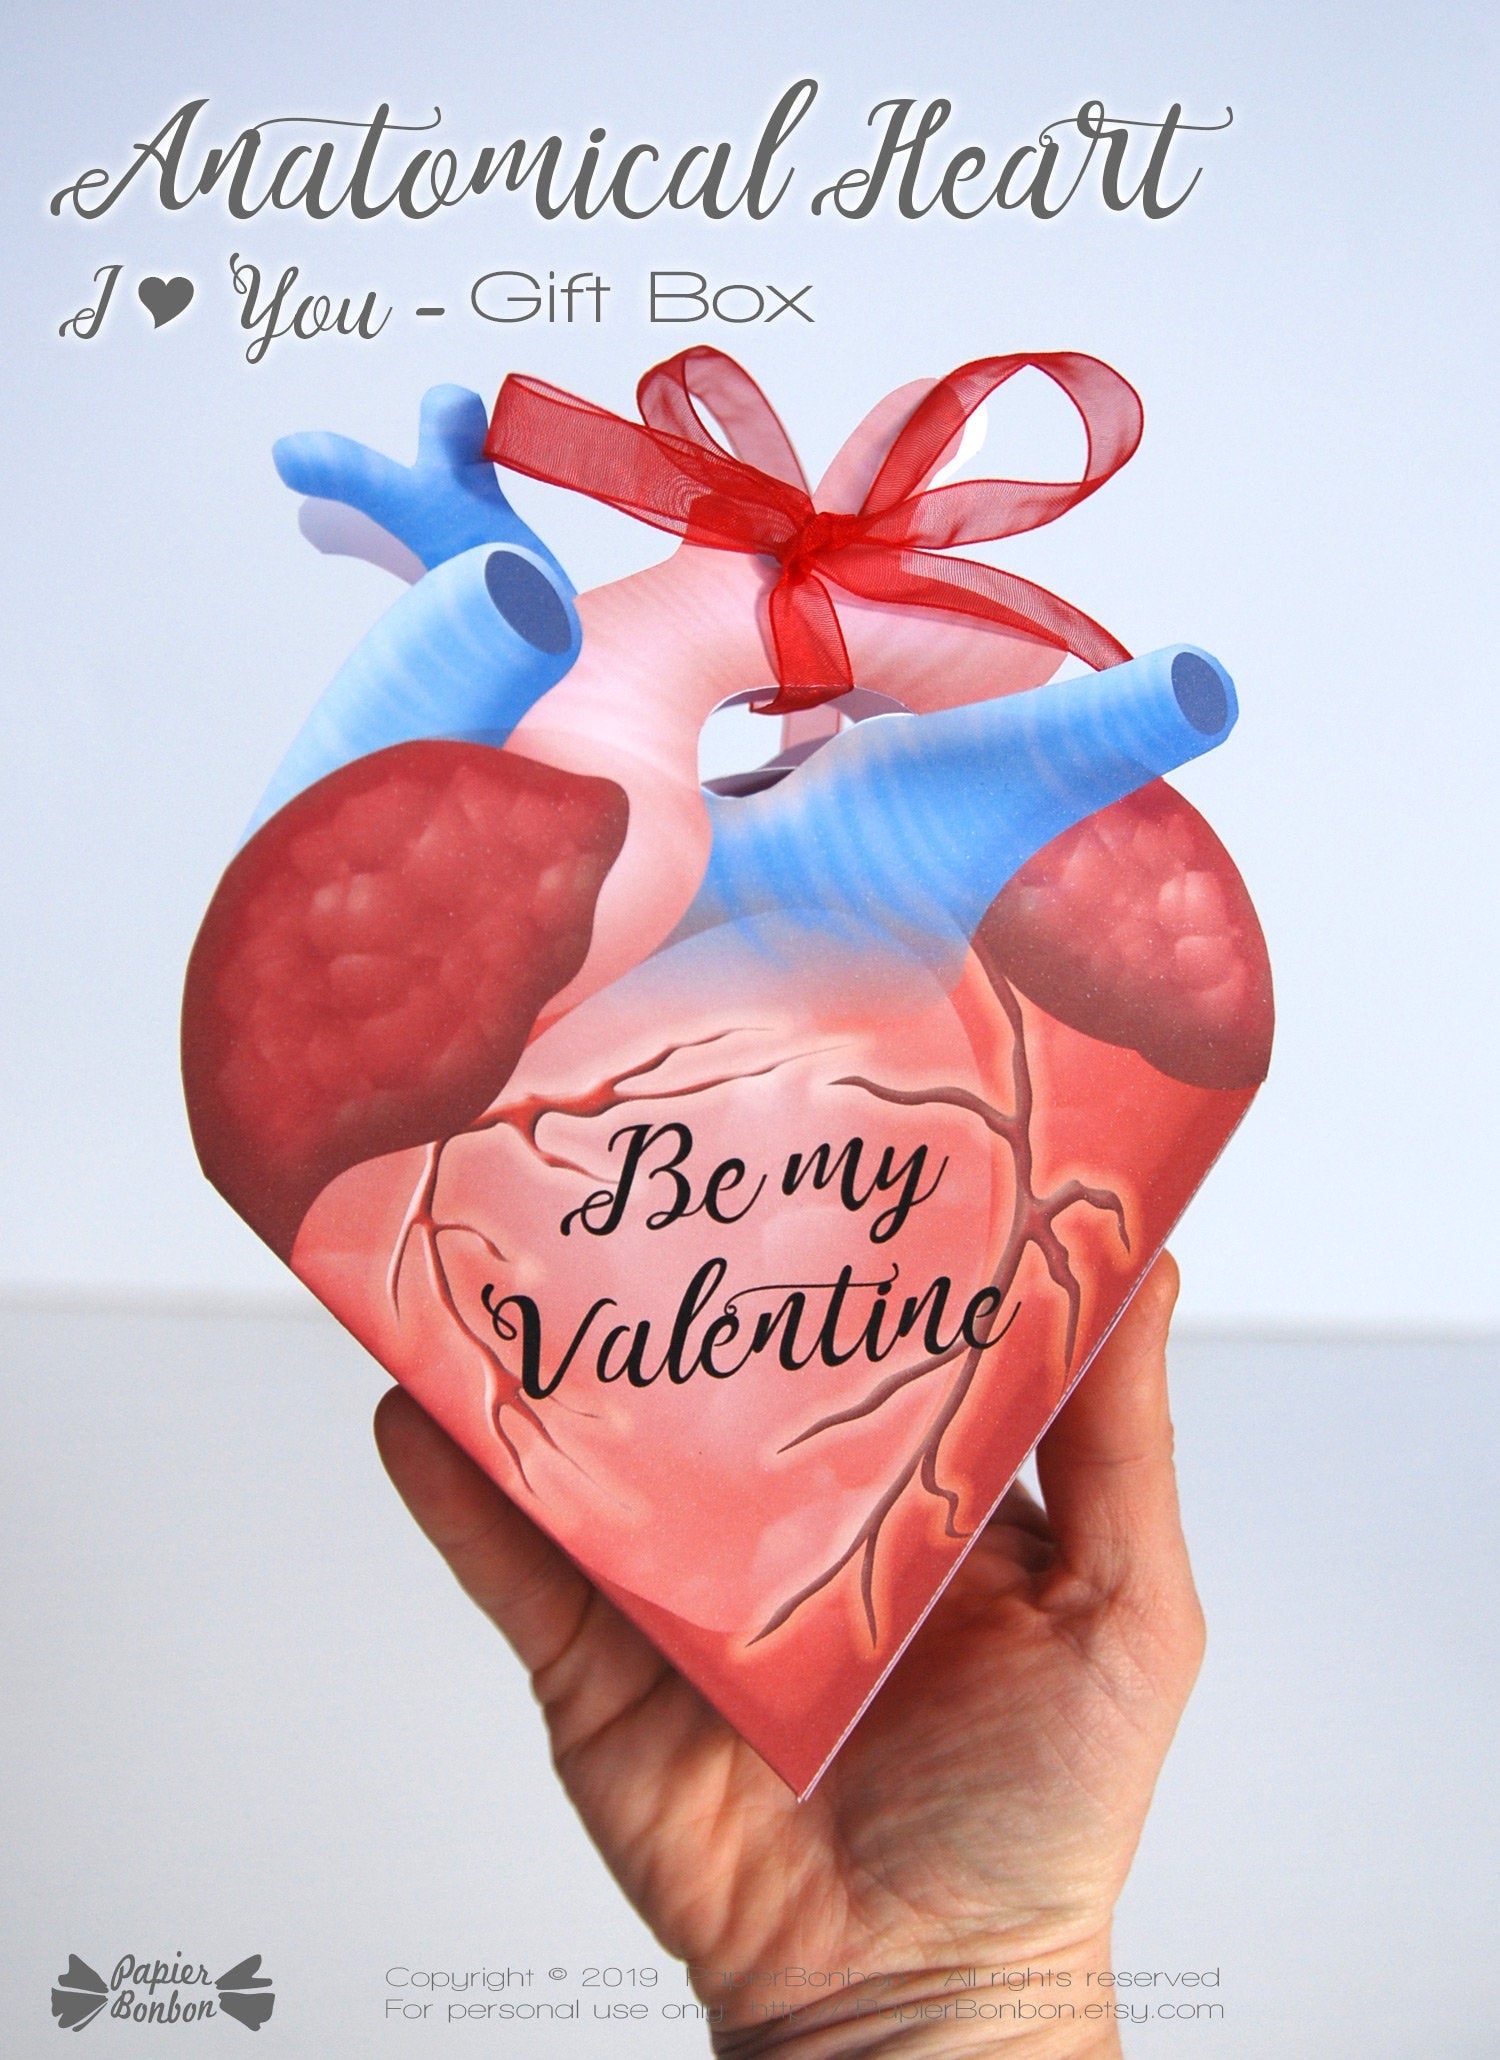 Anatomical Heart gift box - funny anti-Valentine - Papier Bonbon